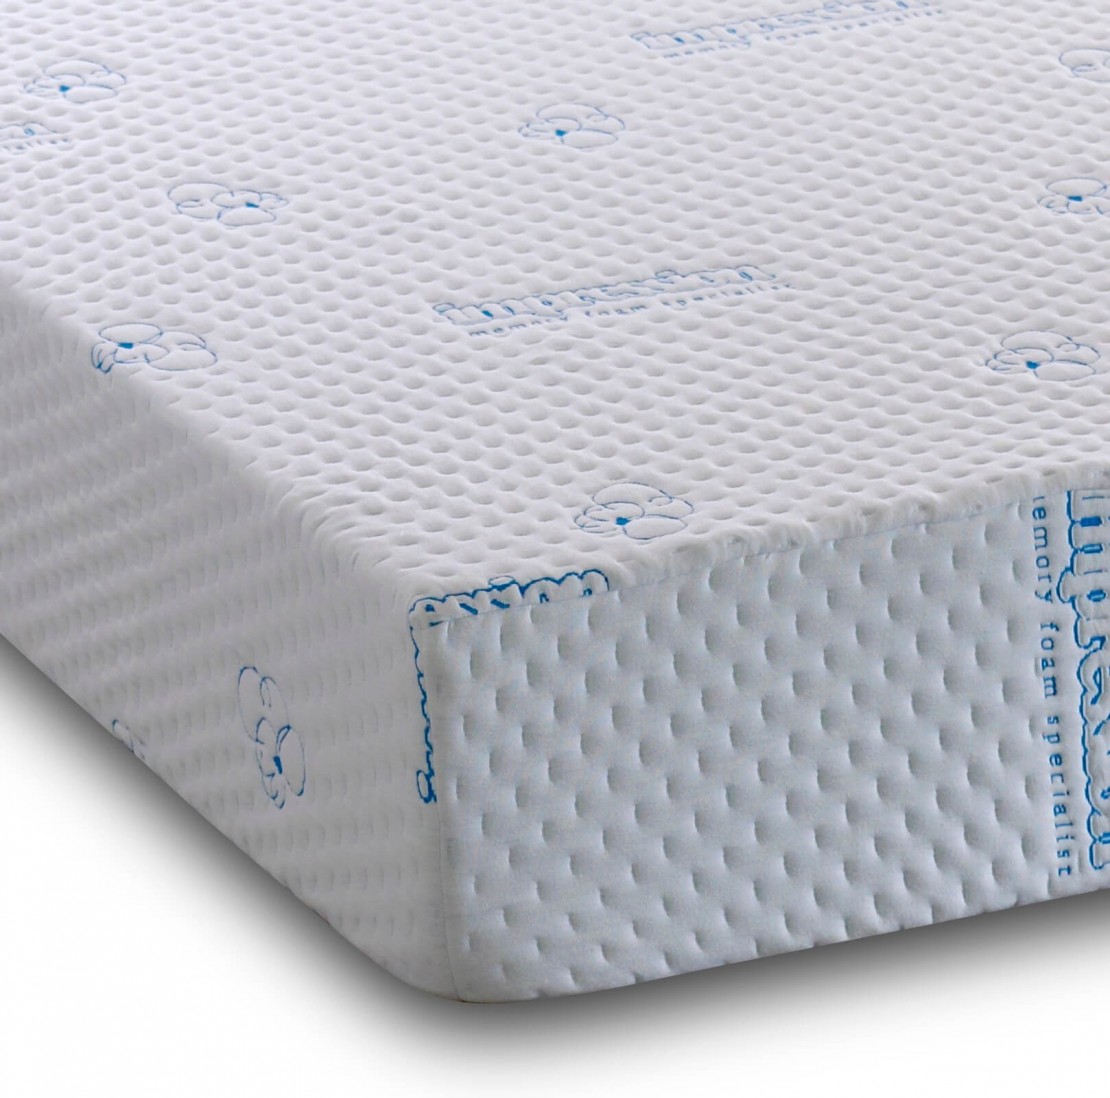 /_images/product-photos/visco-therapy-visco-4000-hd-memory-foam-regular-mattress-a.jpg